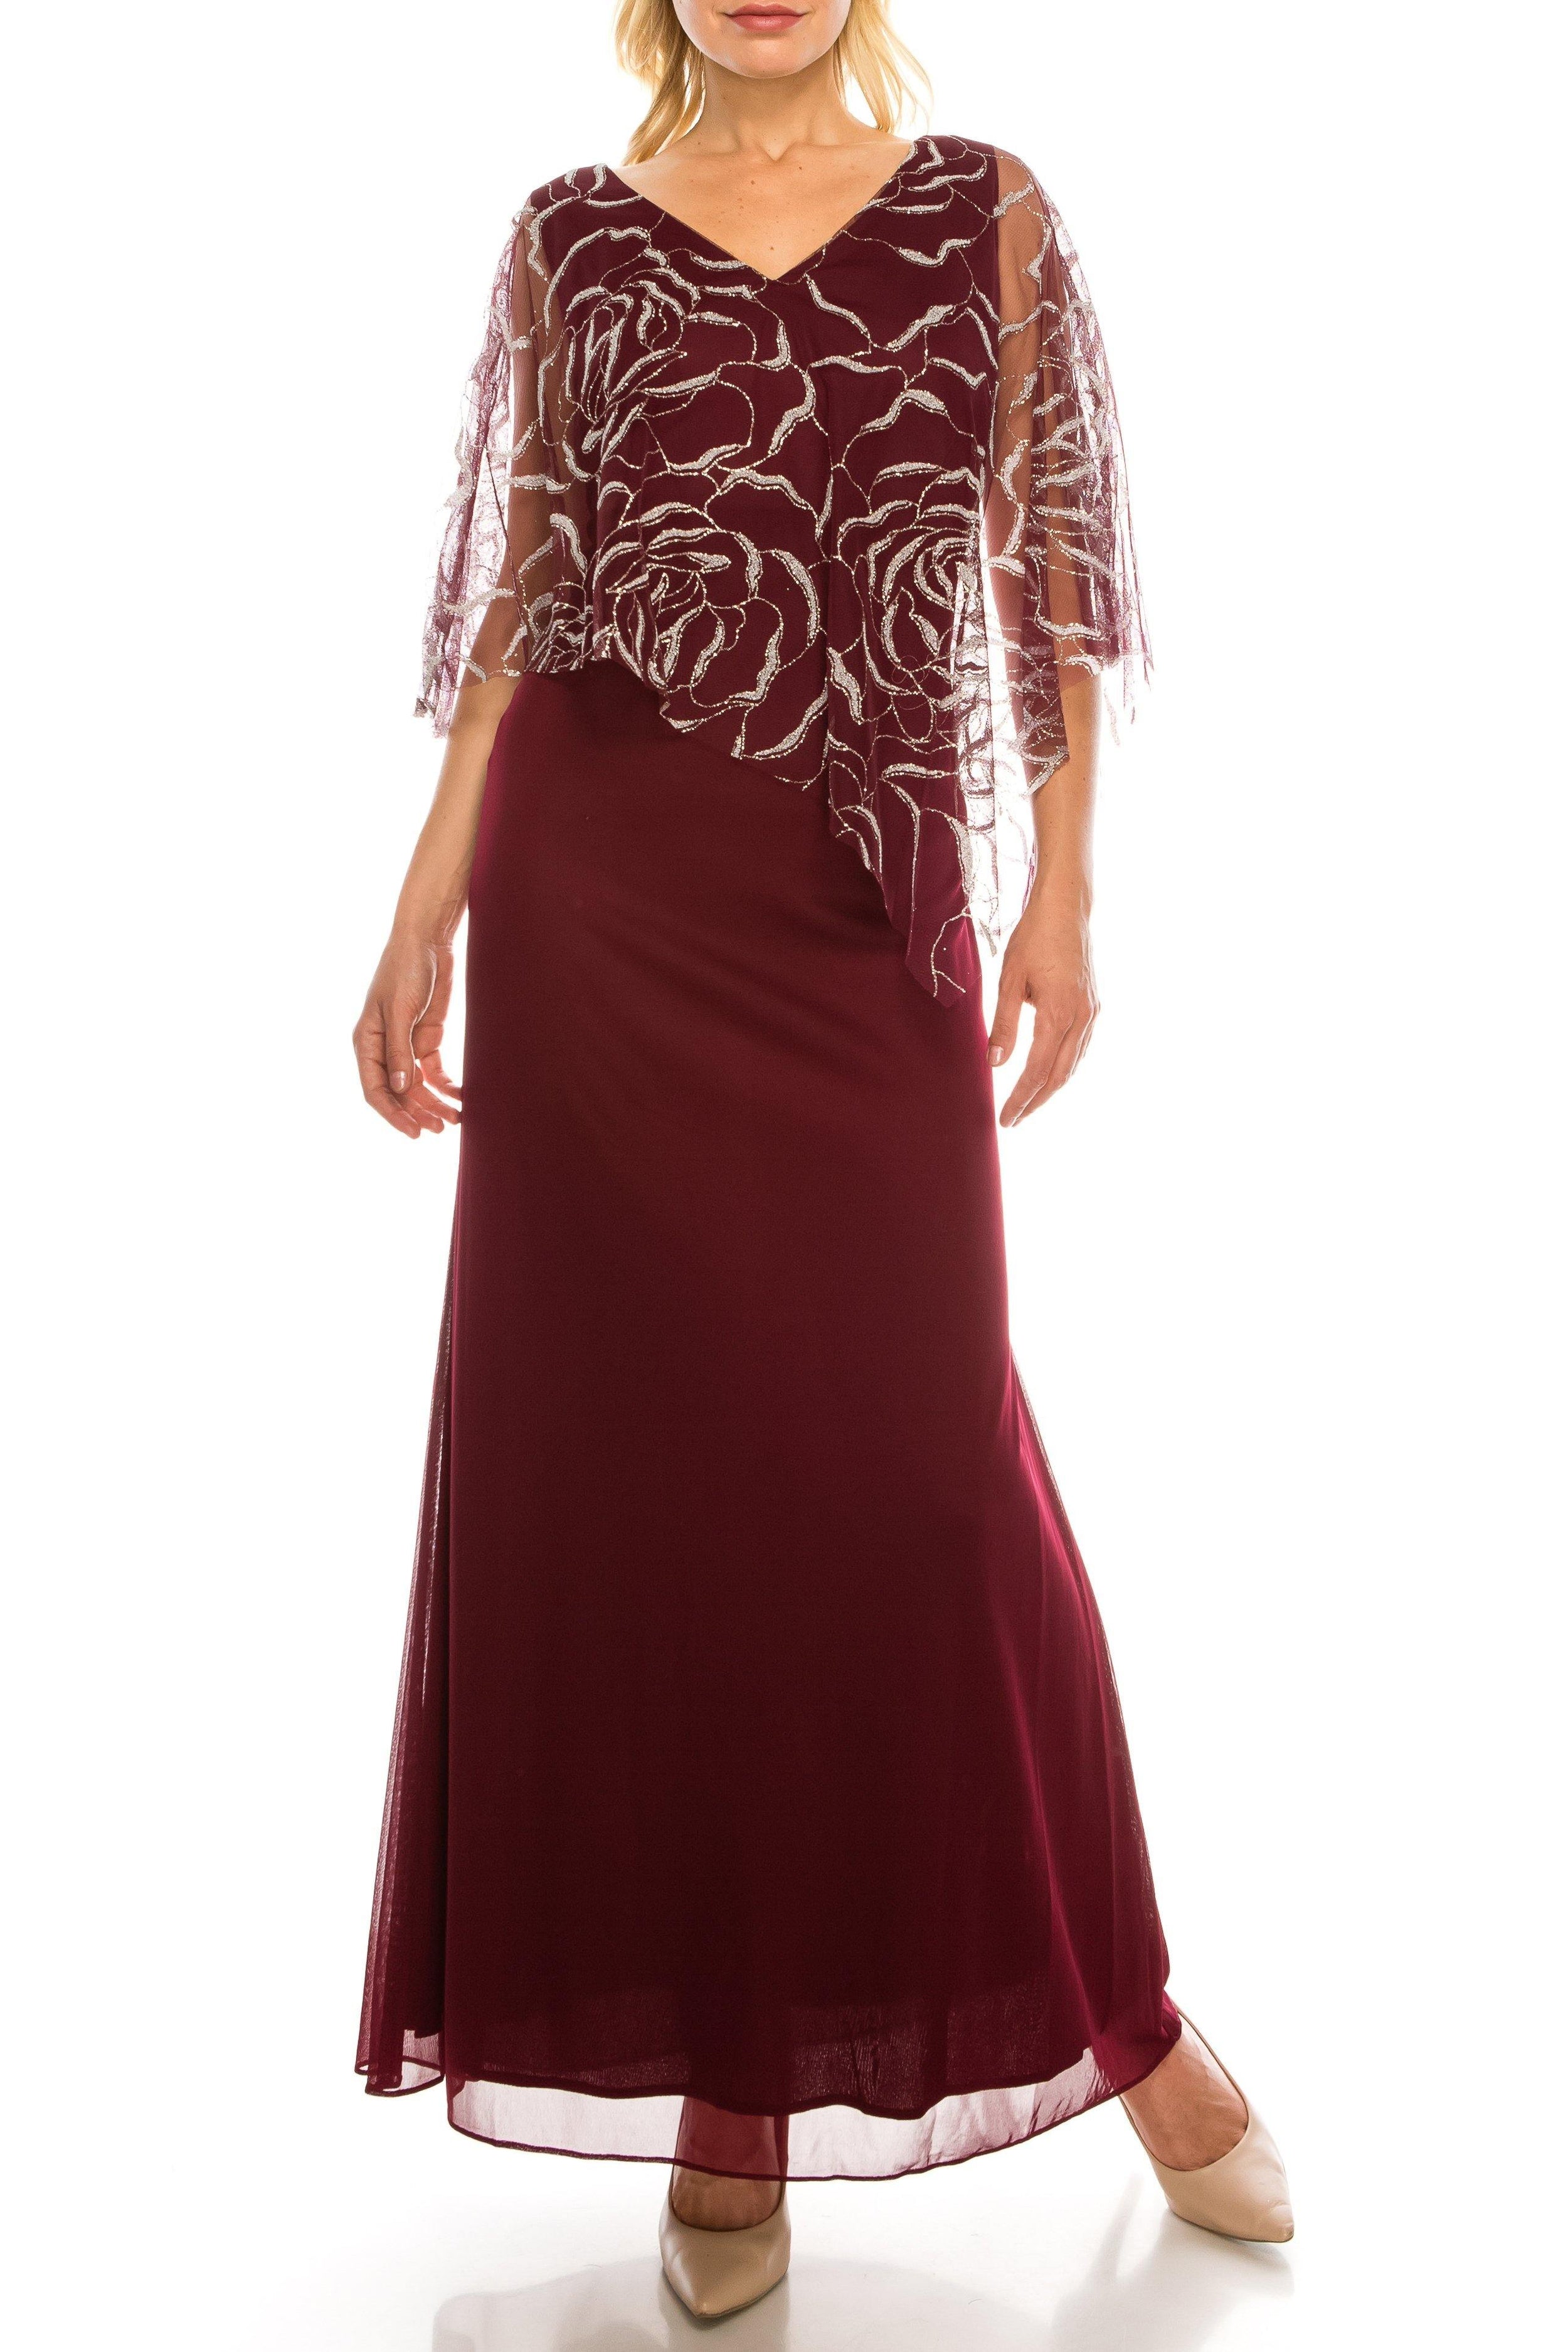 SLNY Wine Long Formal Plus Size Evening Cape Dress - The Dress Outlet